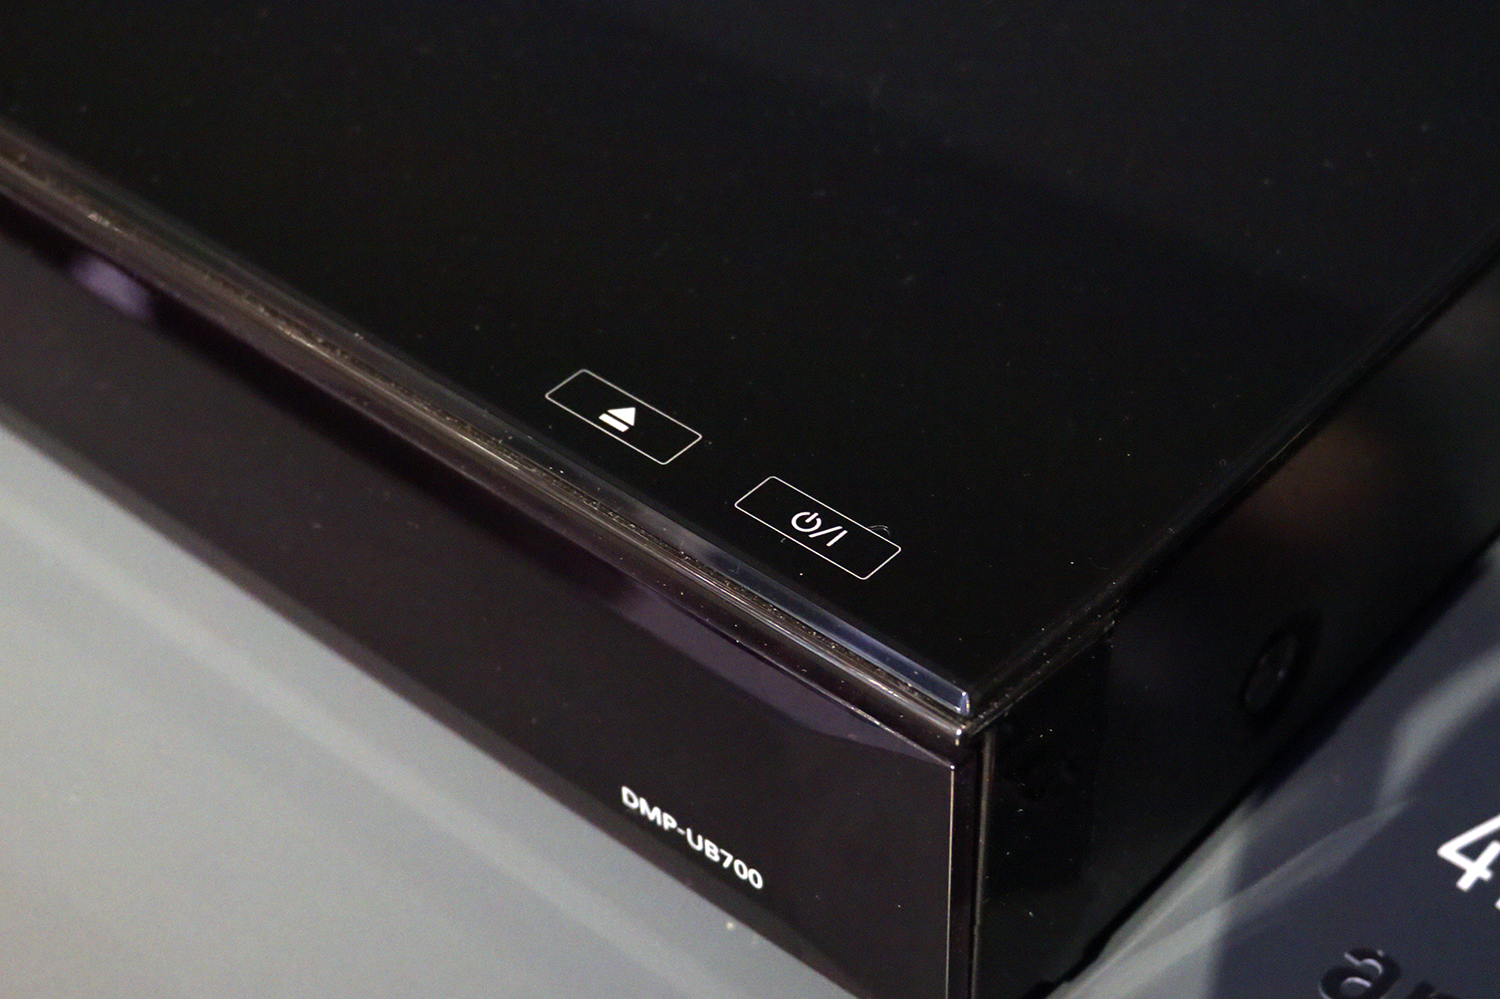 Panasonic DMP-UB700 Blu-ray-player